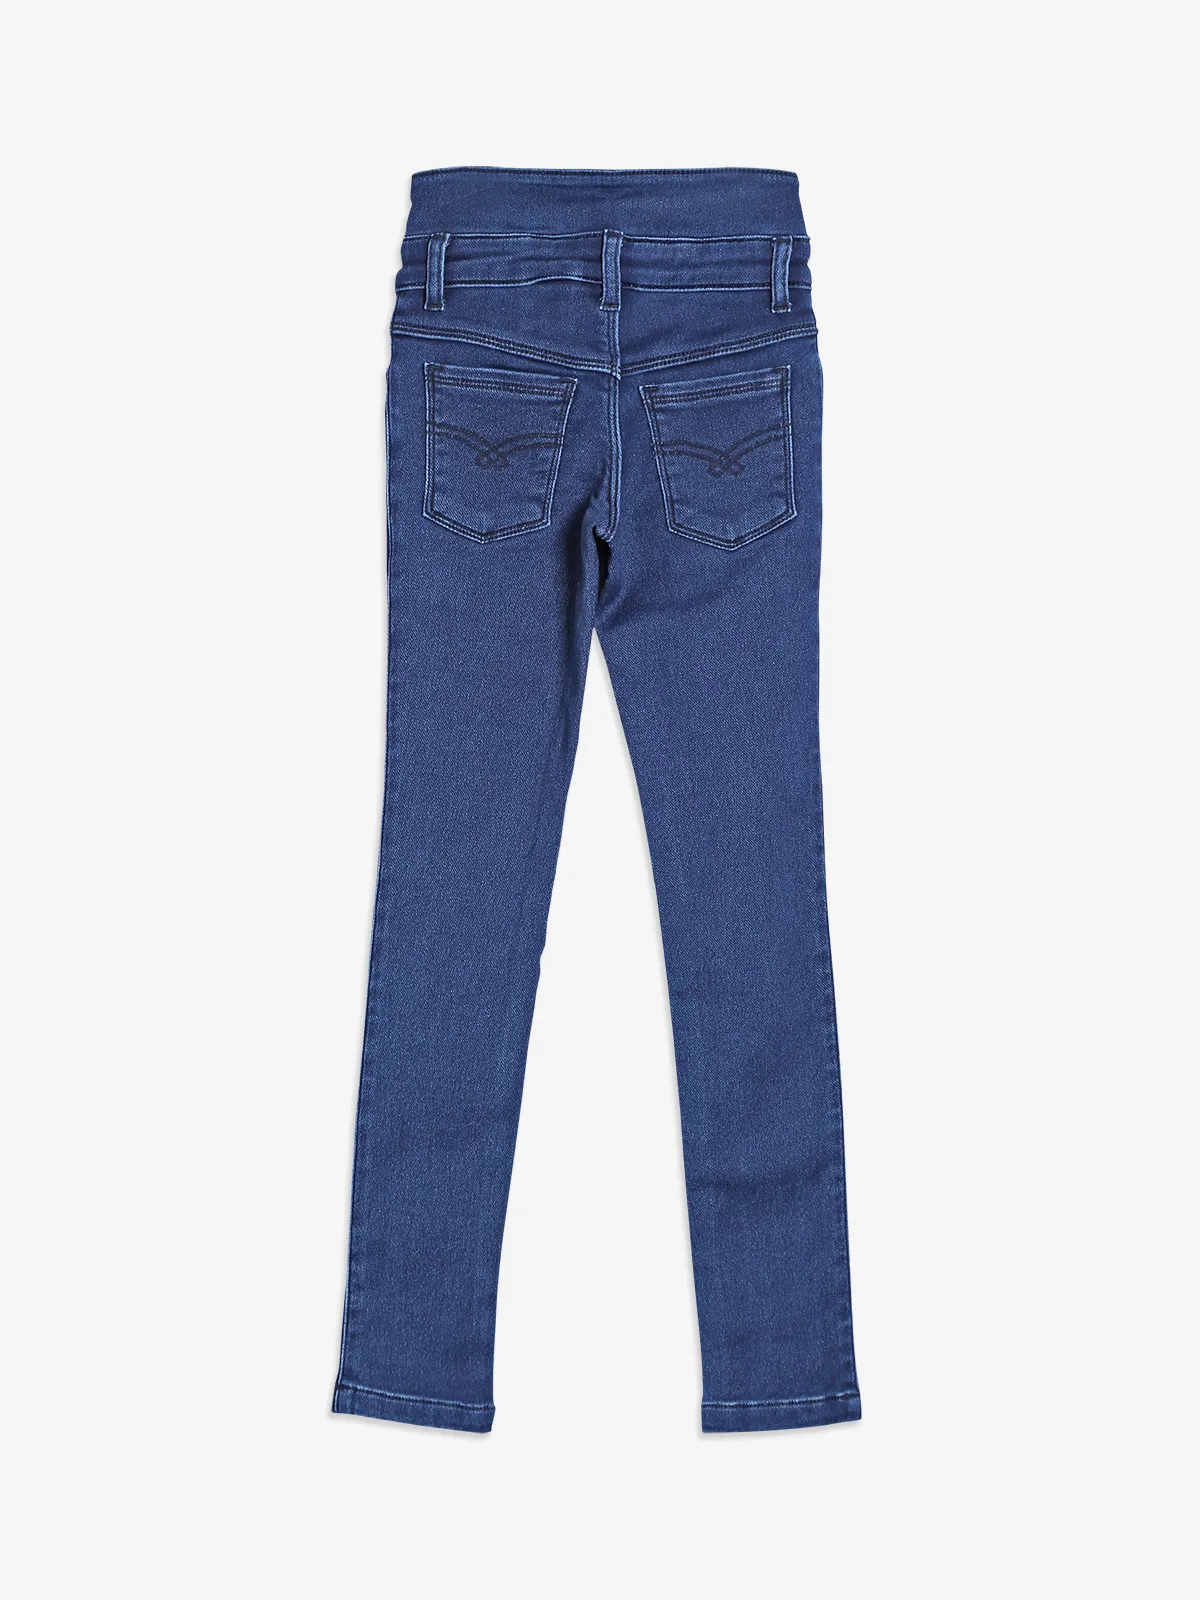 Dark blue denim jeans in solid for girls